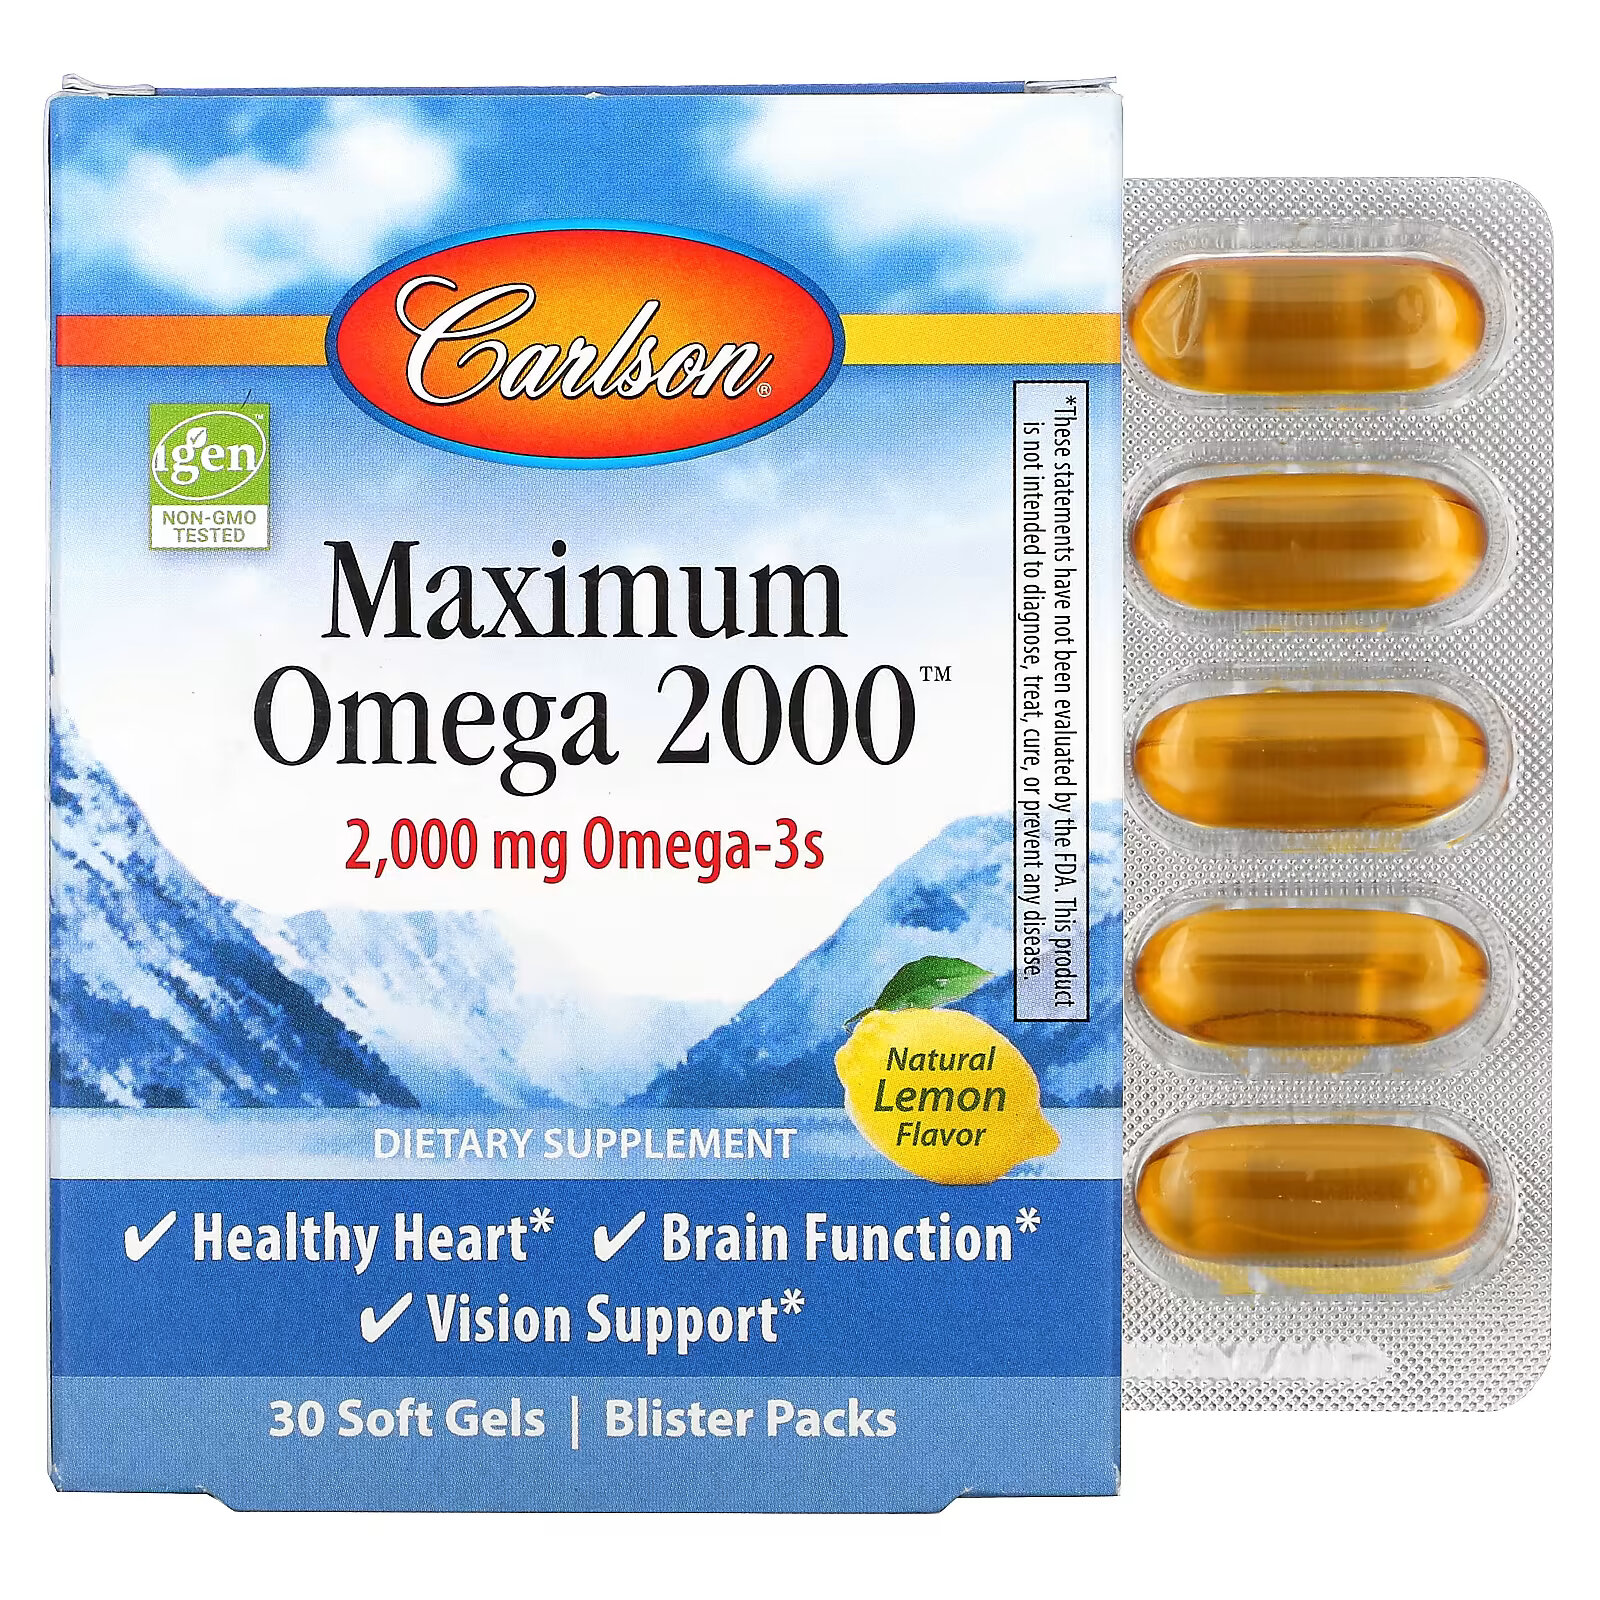 Carlson, Maximum Omega 2000, натуральный лимонный вкус, 1000 мг, 30 мягких таблеток carlson elite omega 3 с витаминами d и k натуральный вкус лимона 180 мягких таблеток